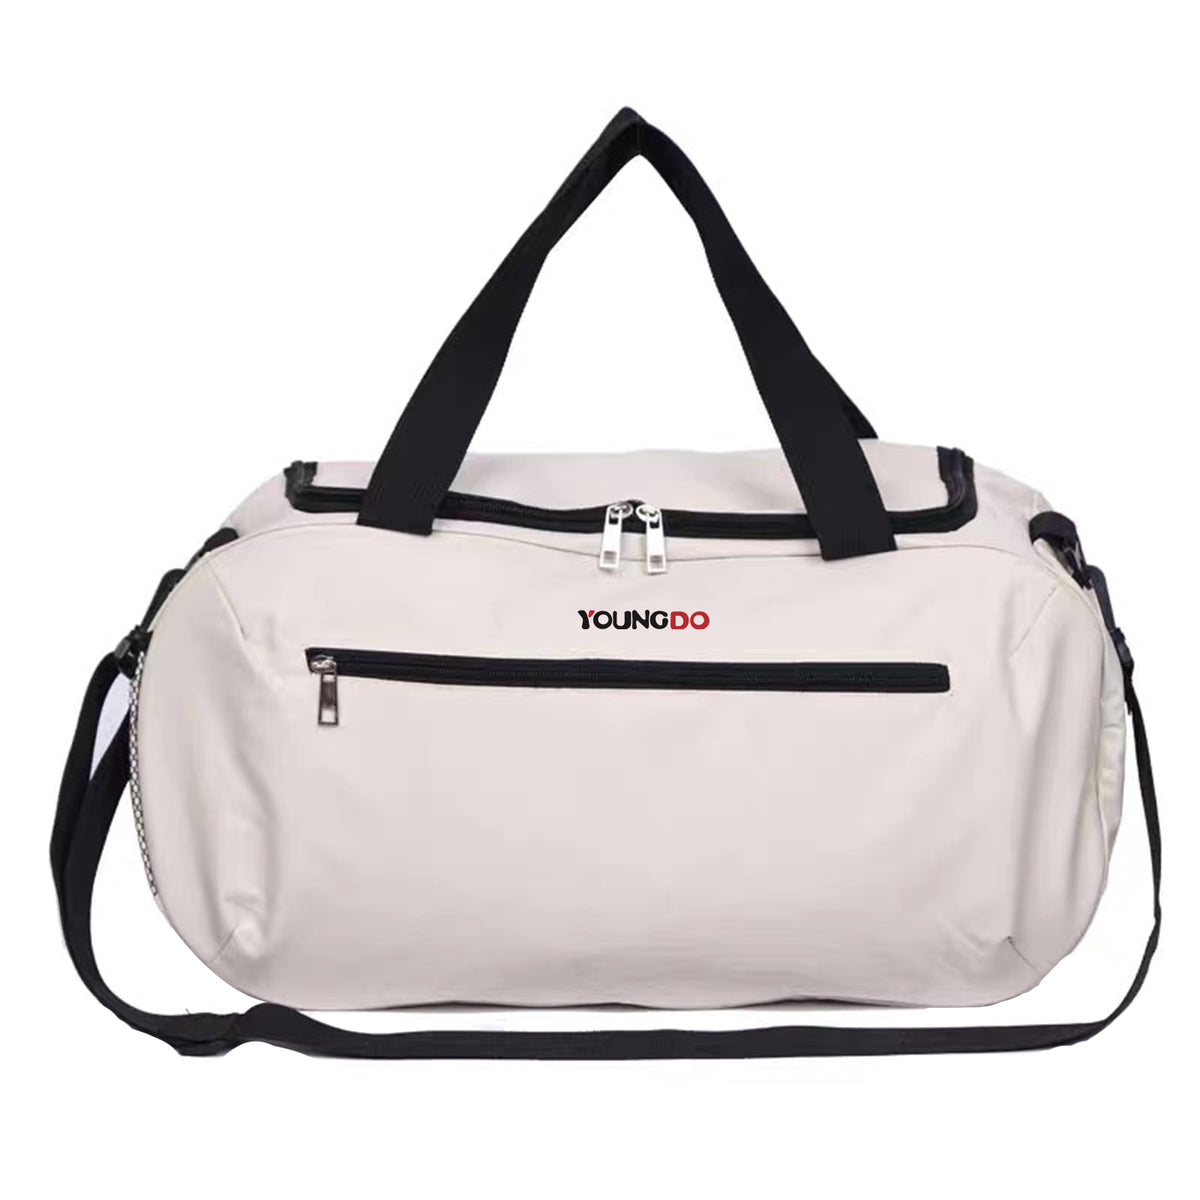 YOUNGDO Gym Bag for Men, 35L Travel Duffel Bag